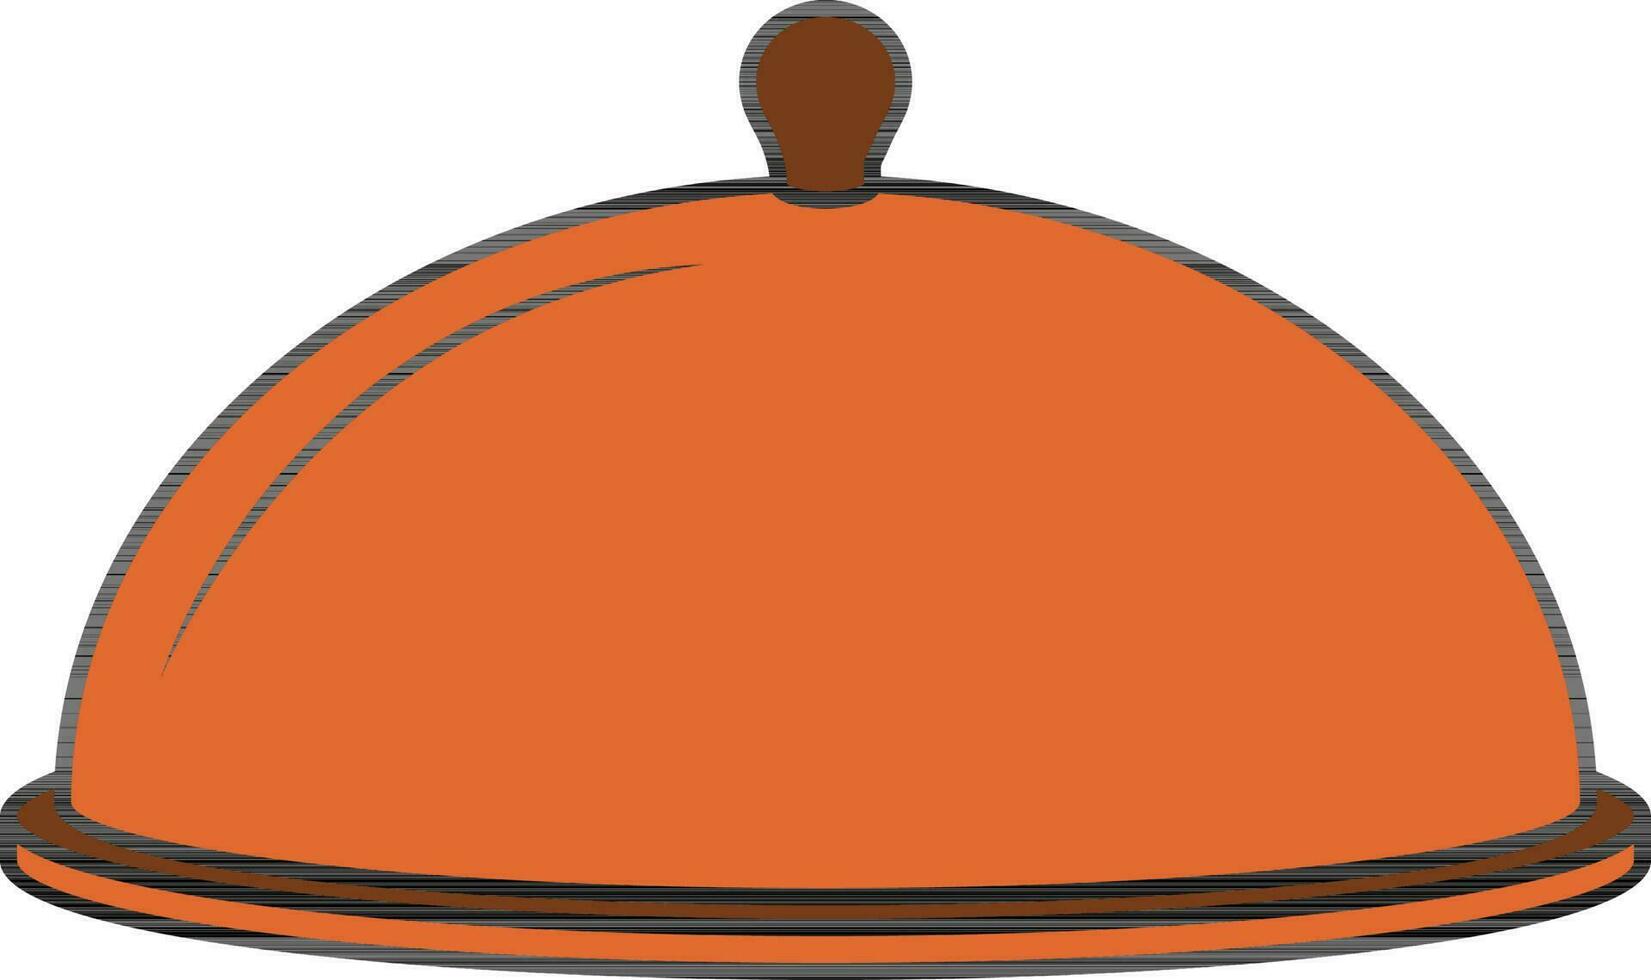 Cloche Icon Or Symbol In Brown And Orange Color. vector